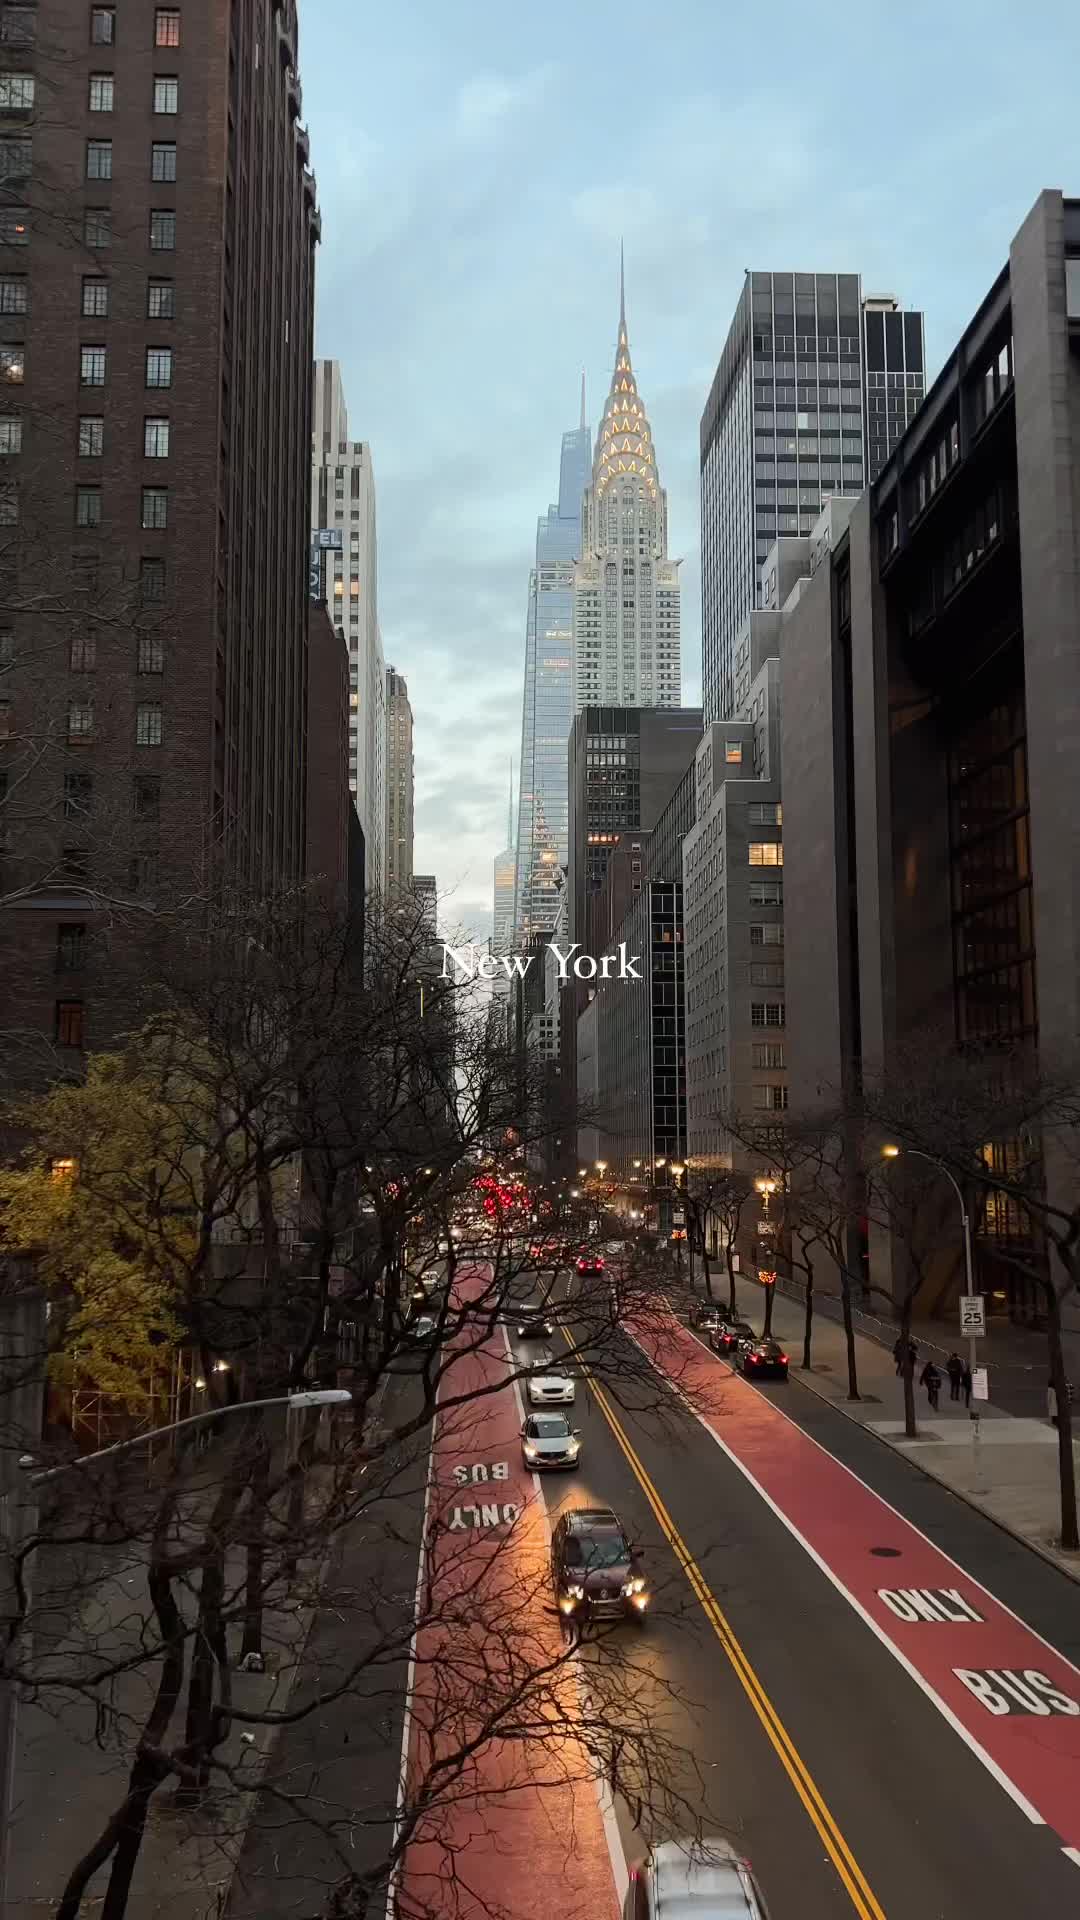 Twilight Magic on 42nd Street: NYC's Iconic Chrysler Building